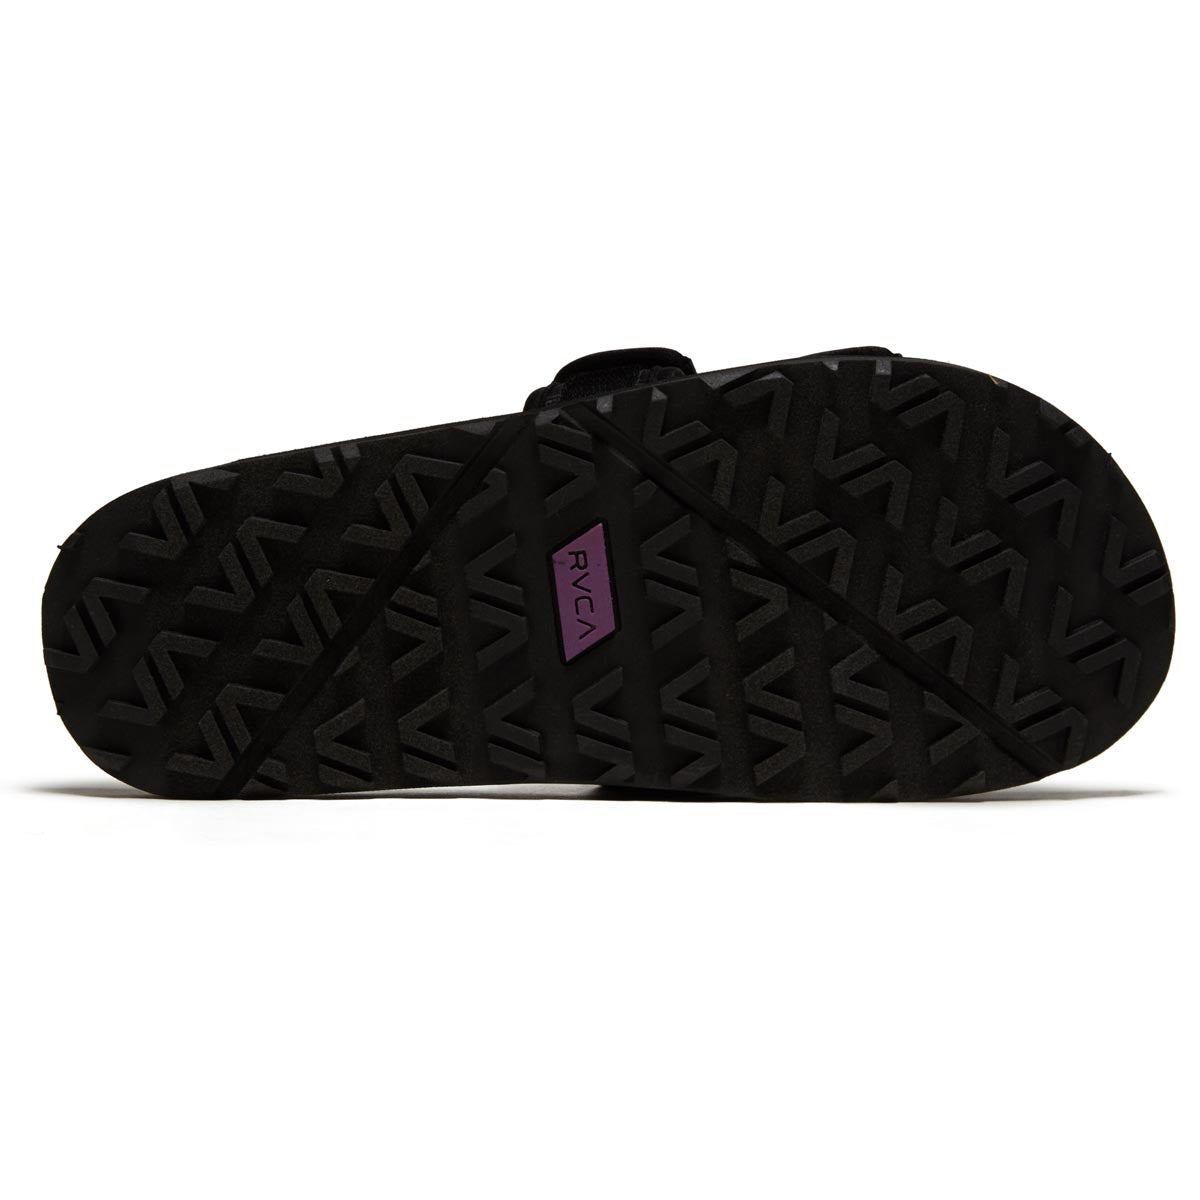 RVCA Peak Sandal Shoes - Black image 4